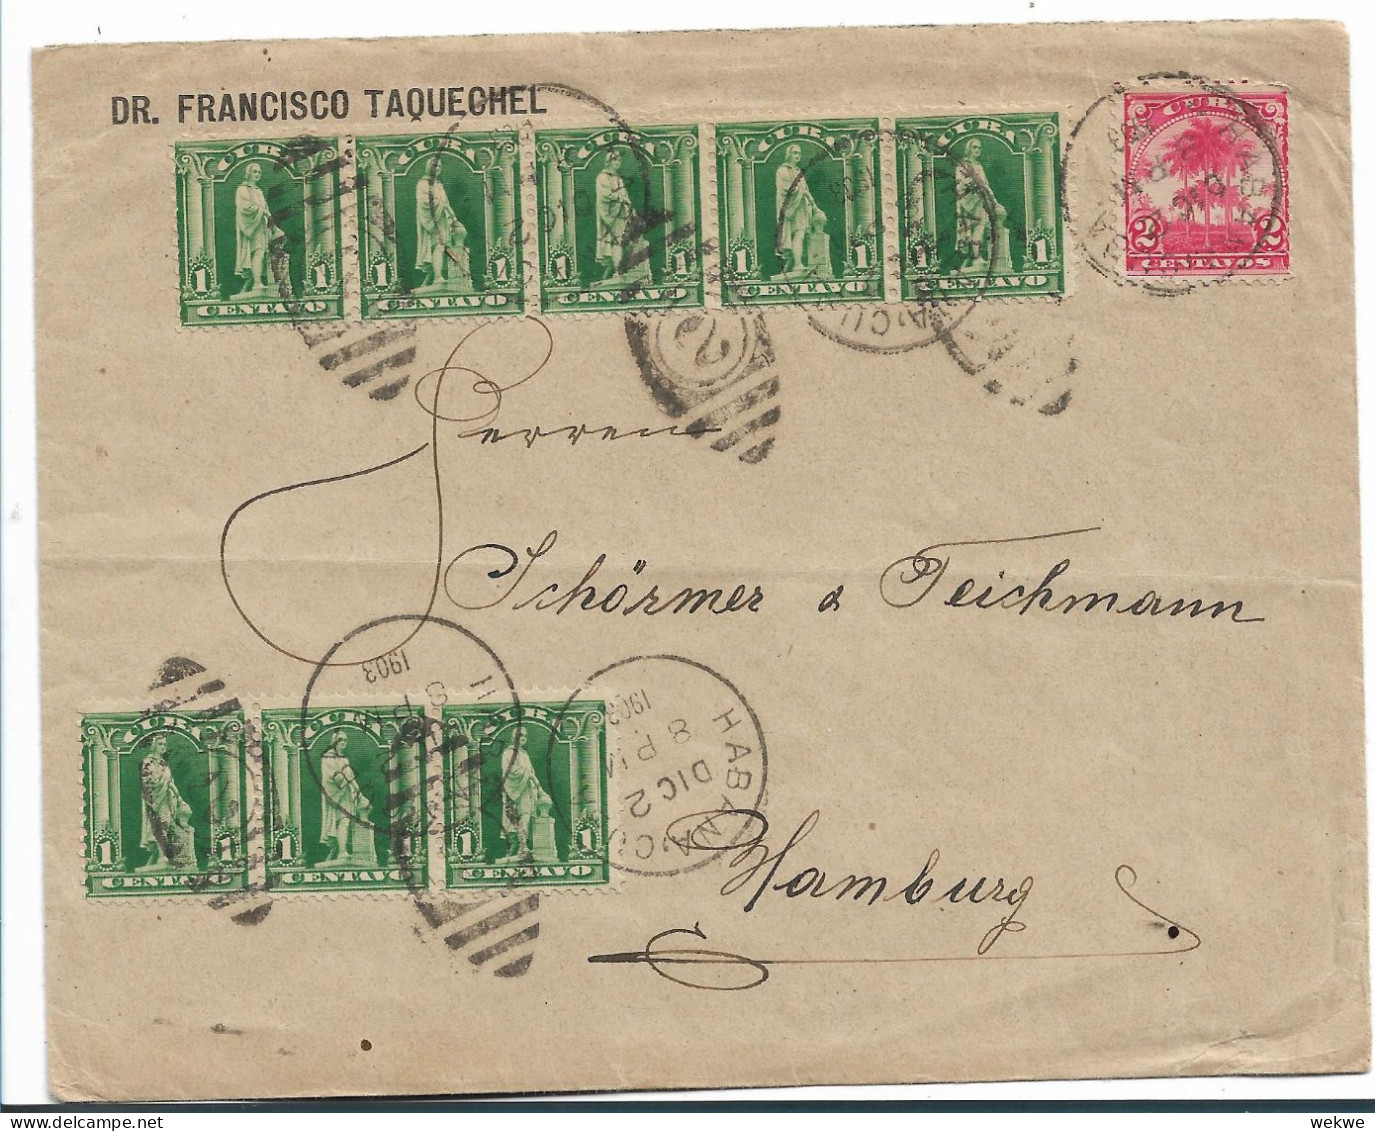 CUBA 047  Habana 1903 Nach Hamburg. Interessante Frankatur - Lettres & Documents